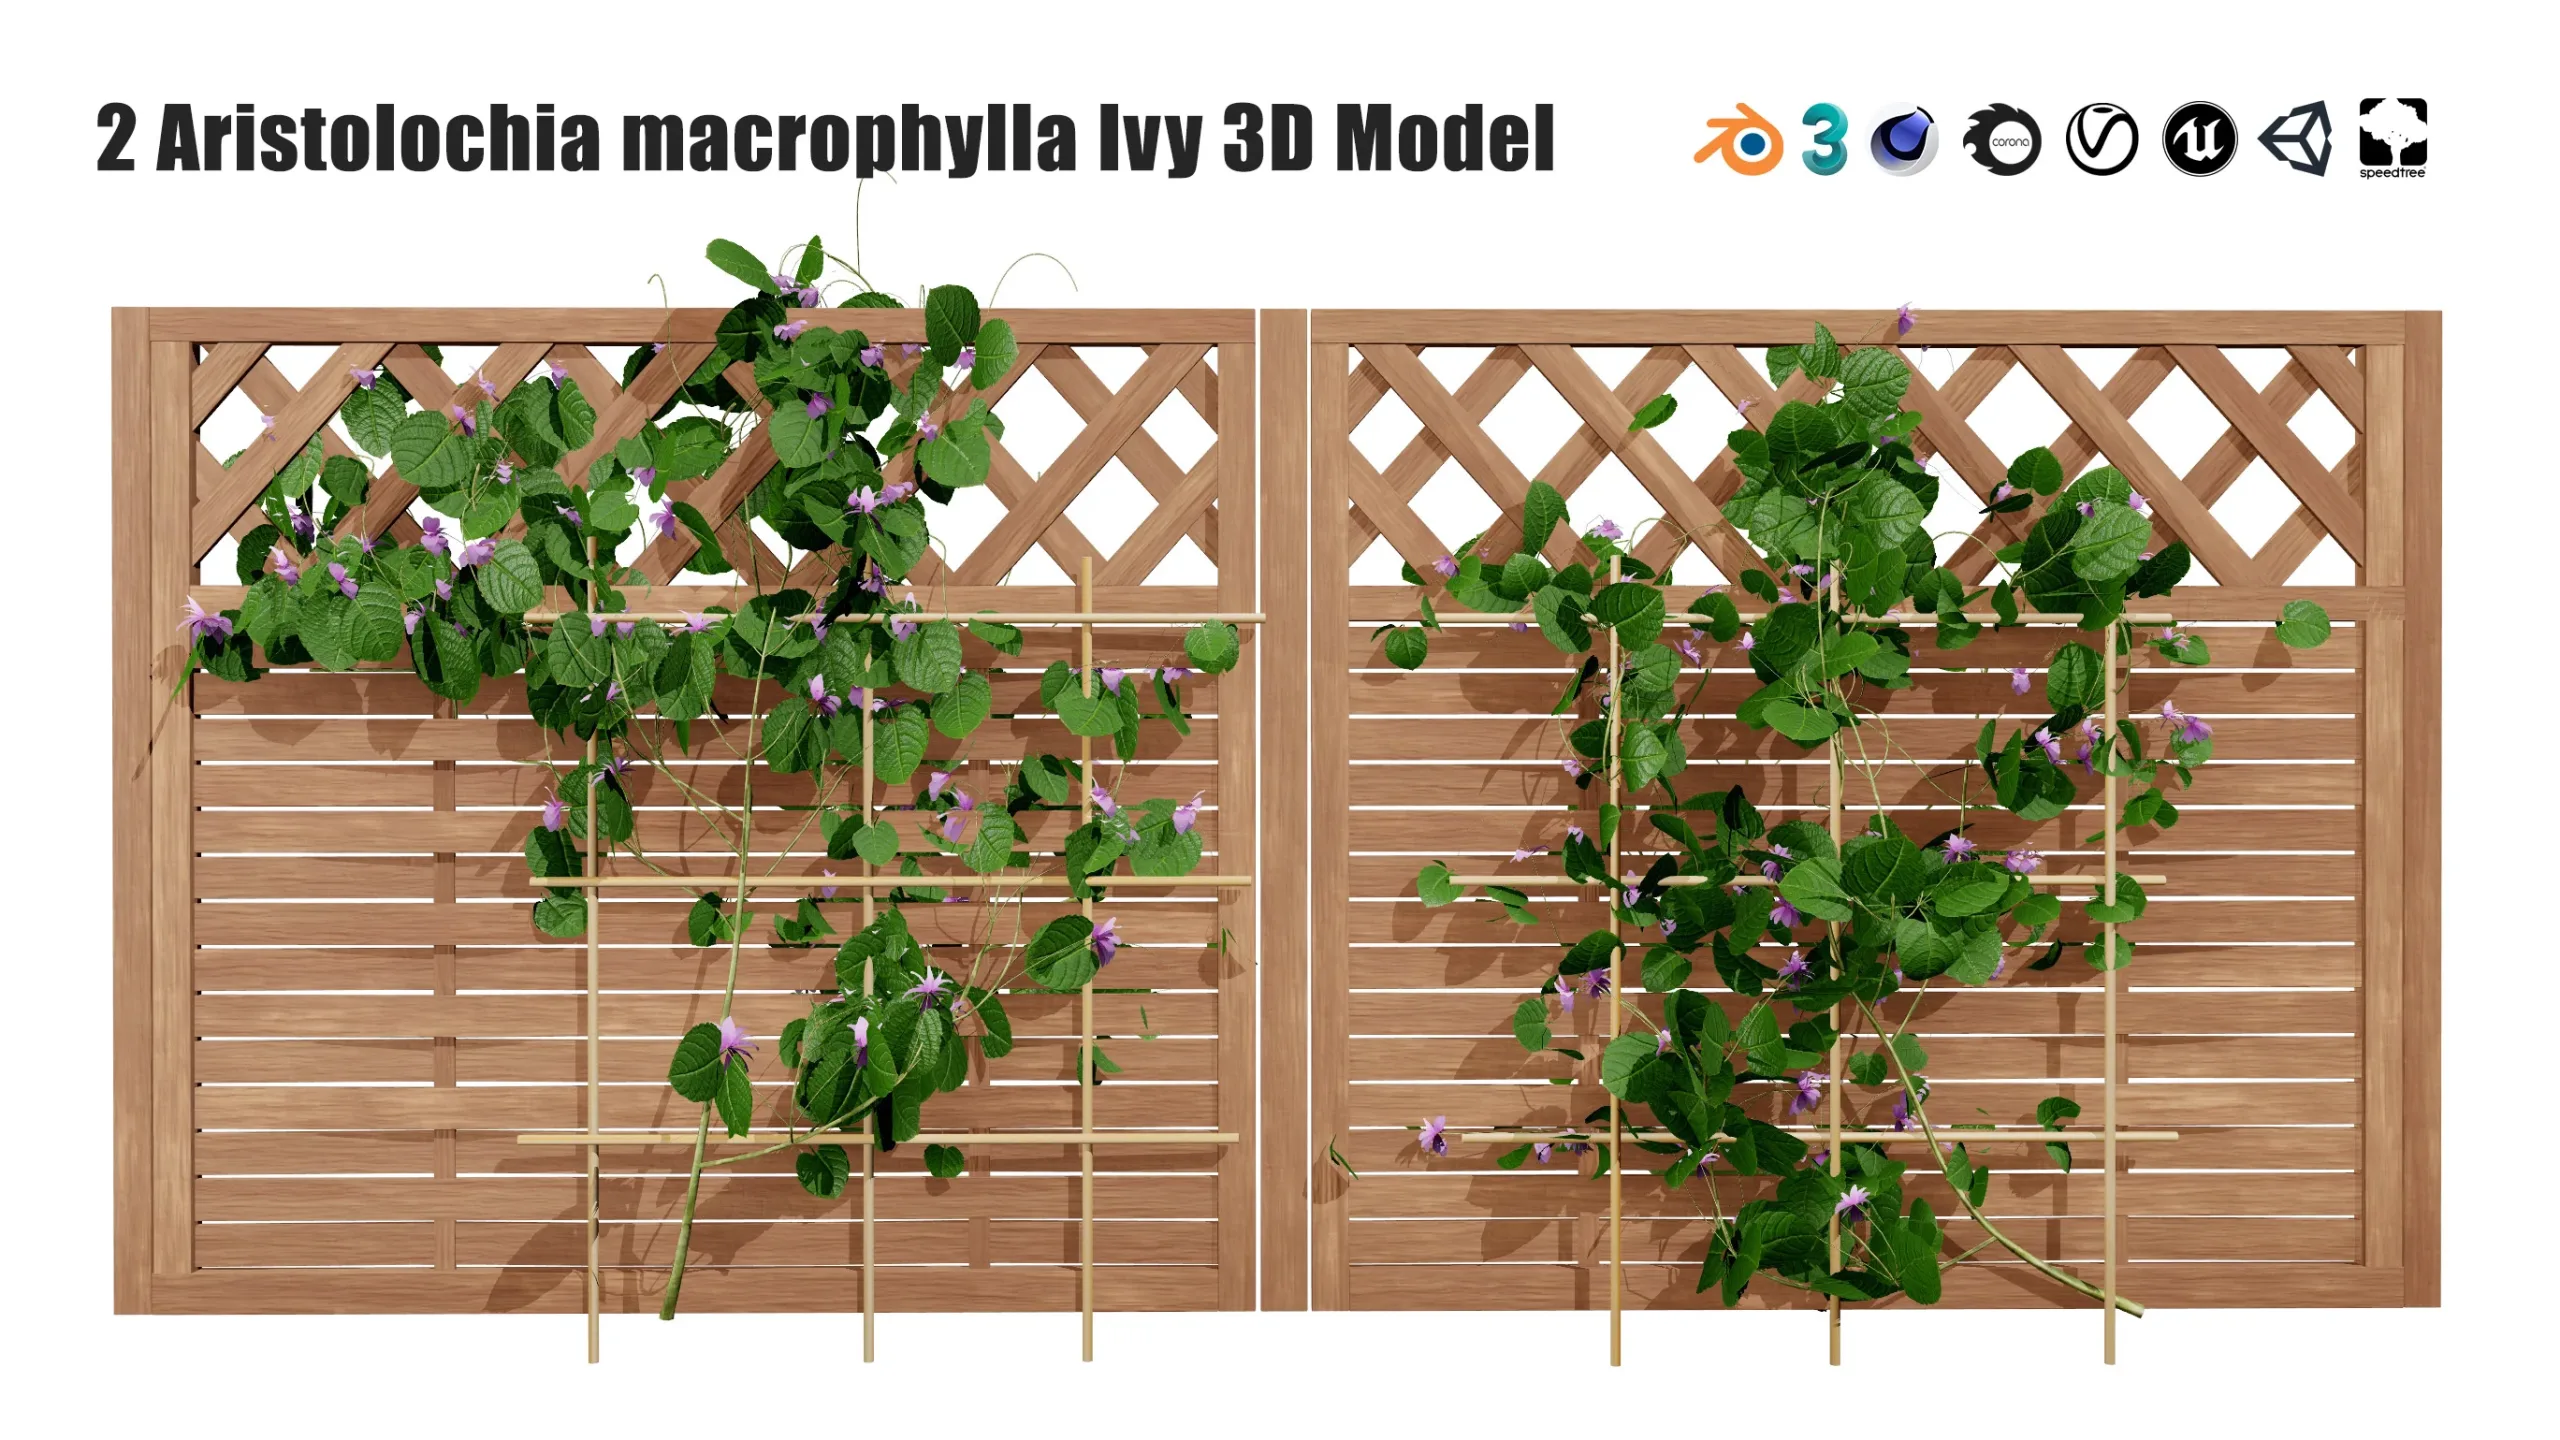 Aristolochia macrophylla vine 3d model